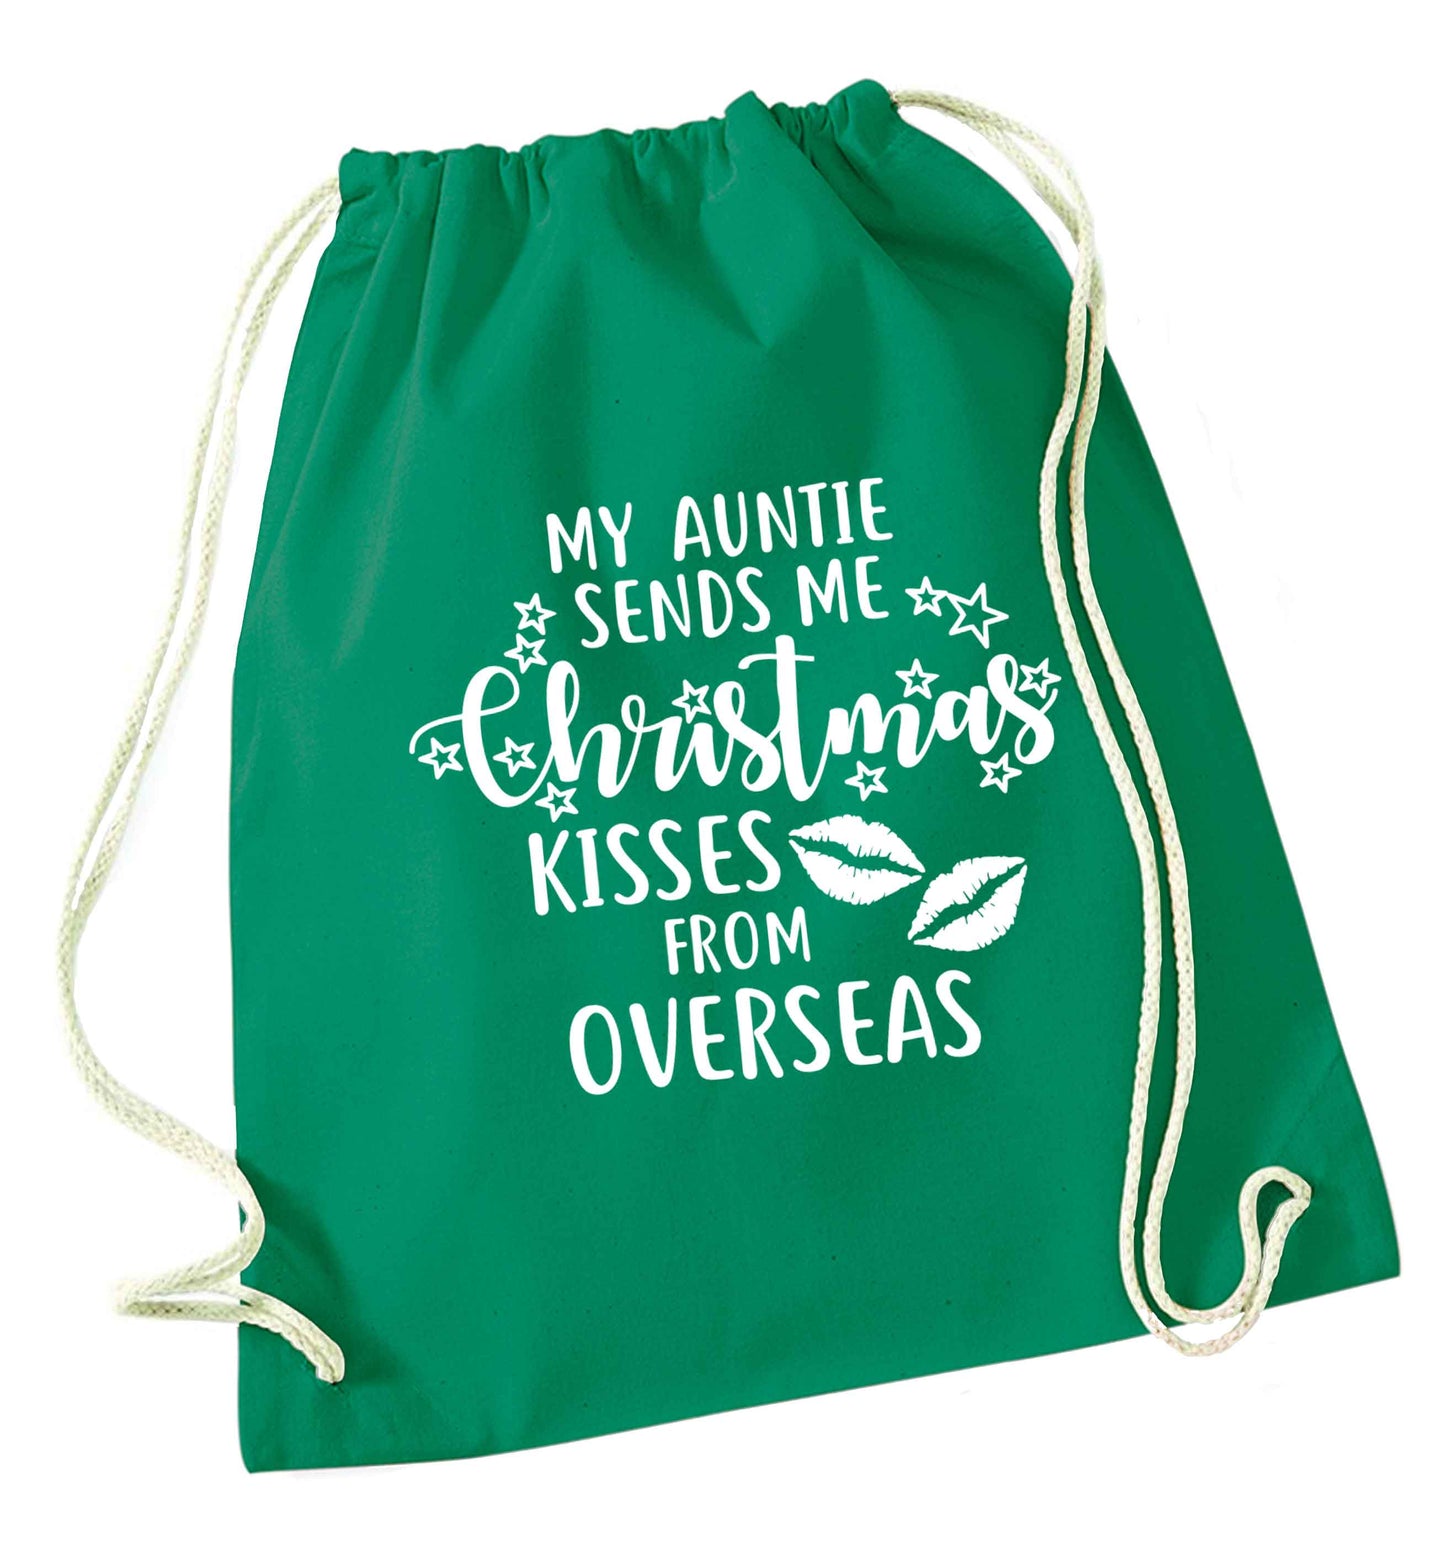 Auntie Christmas Kisses Overseas green drawstring bag